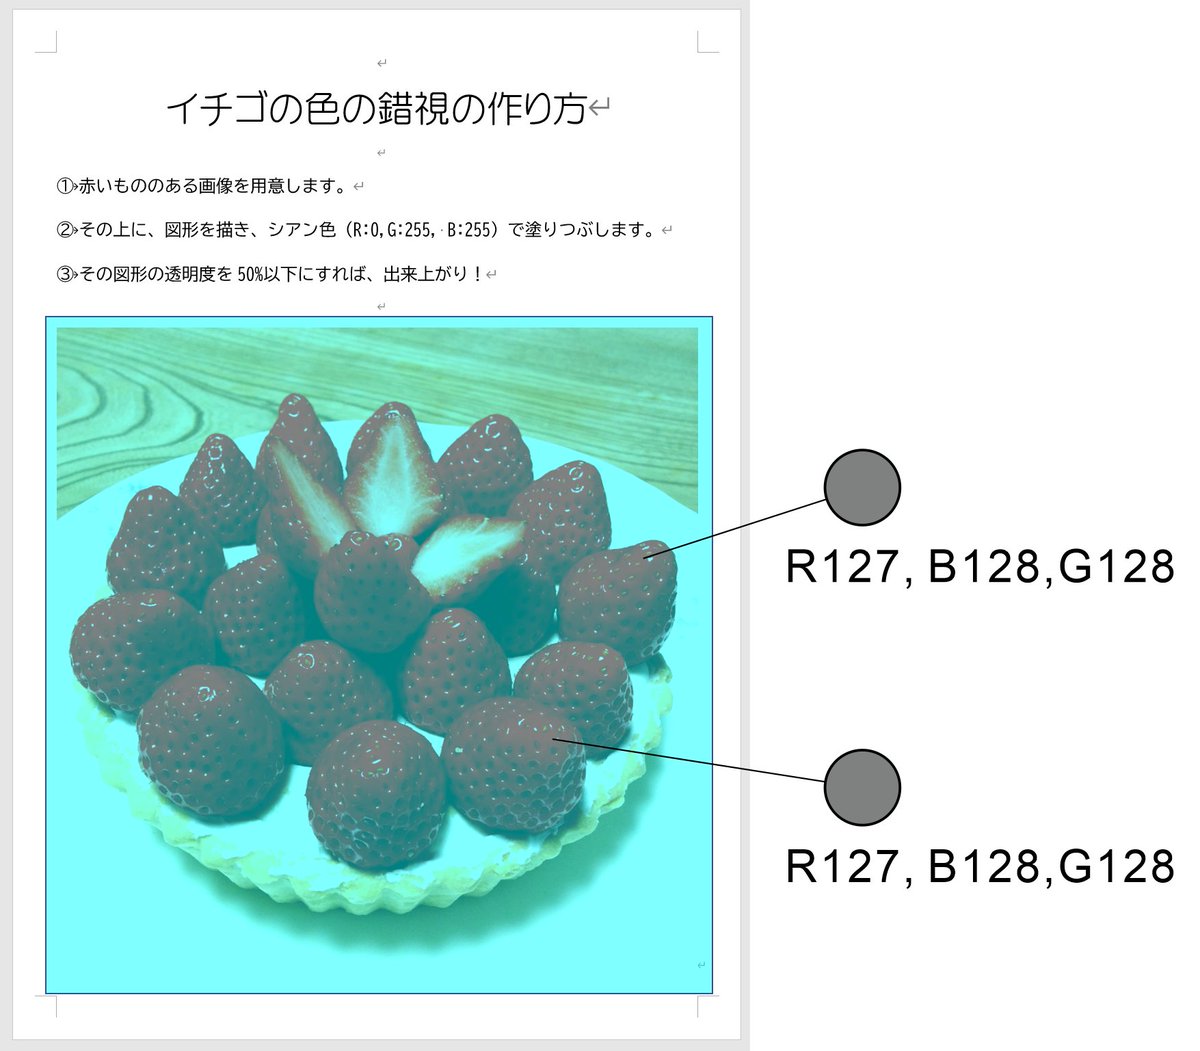 Akiyoshi Kitaoka ワードでイチゴの色の錯視作り方 キャプチャがうまくいかなかったが まあまあ意味はわかるであろう